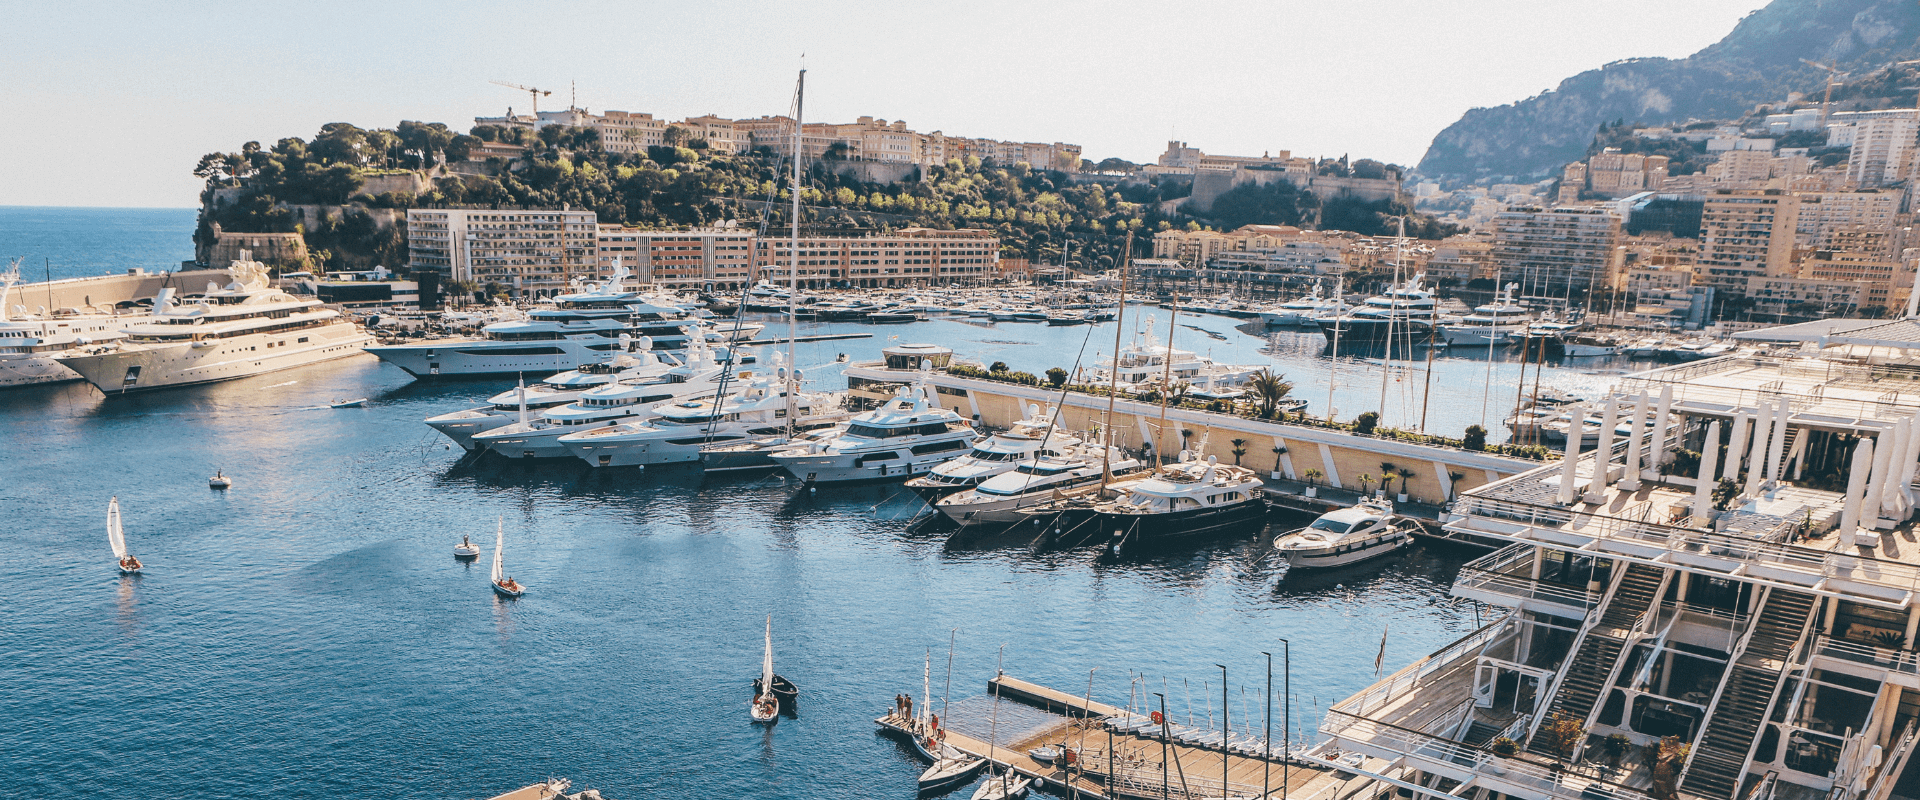 Monaco grand prix circuit marina